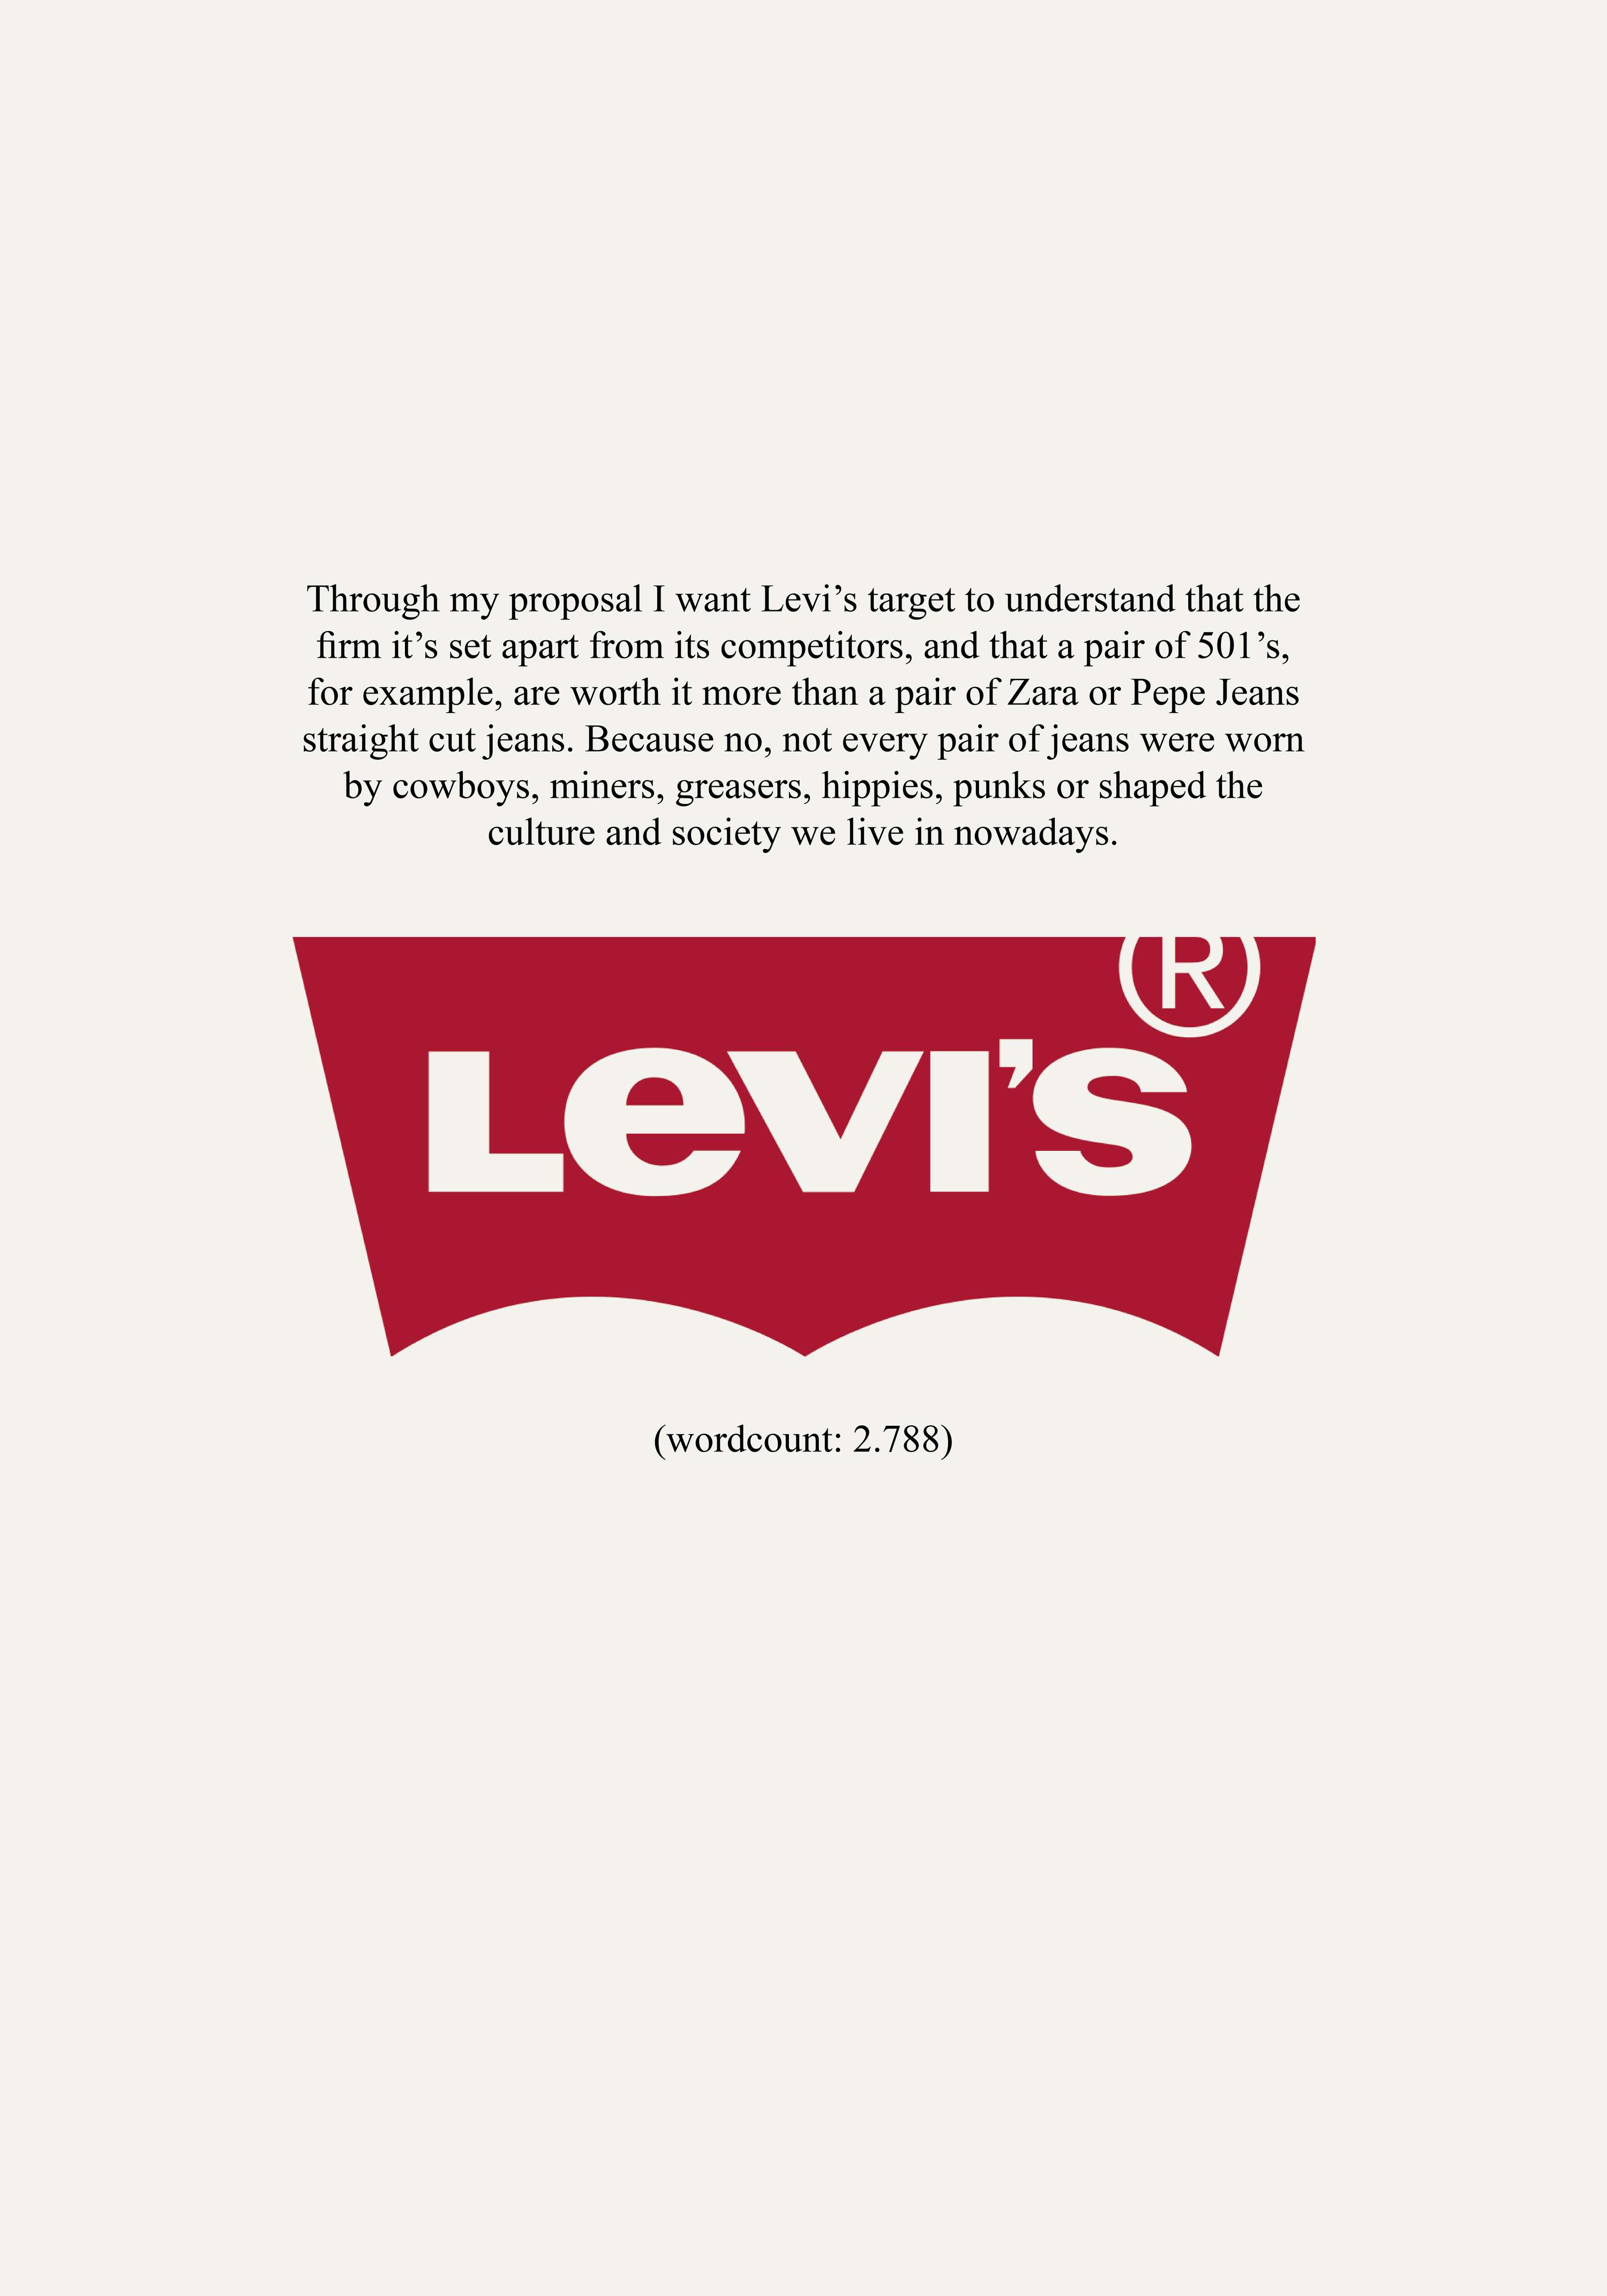 LEVI'S BRAND IDENTITY IMPROVEMENT. | The Dots